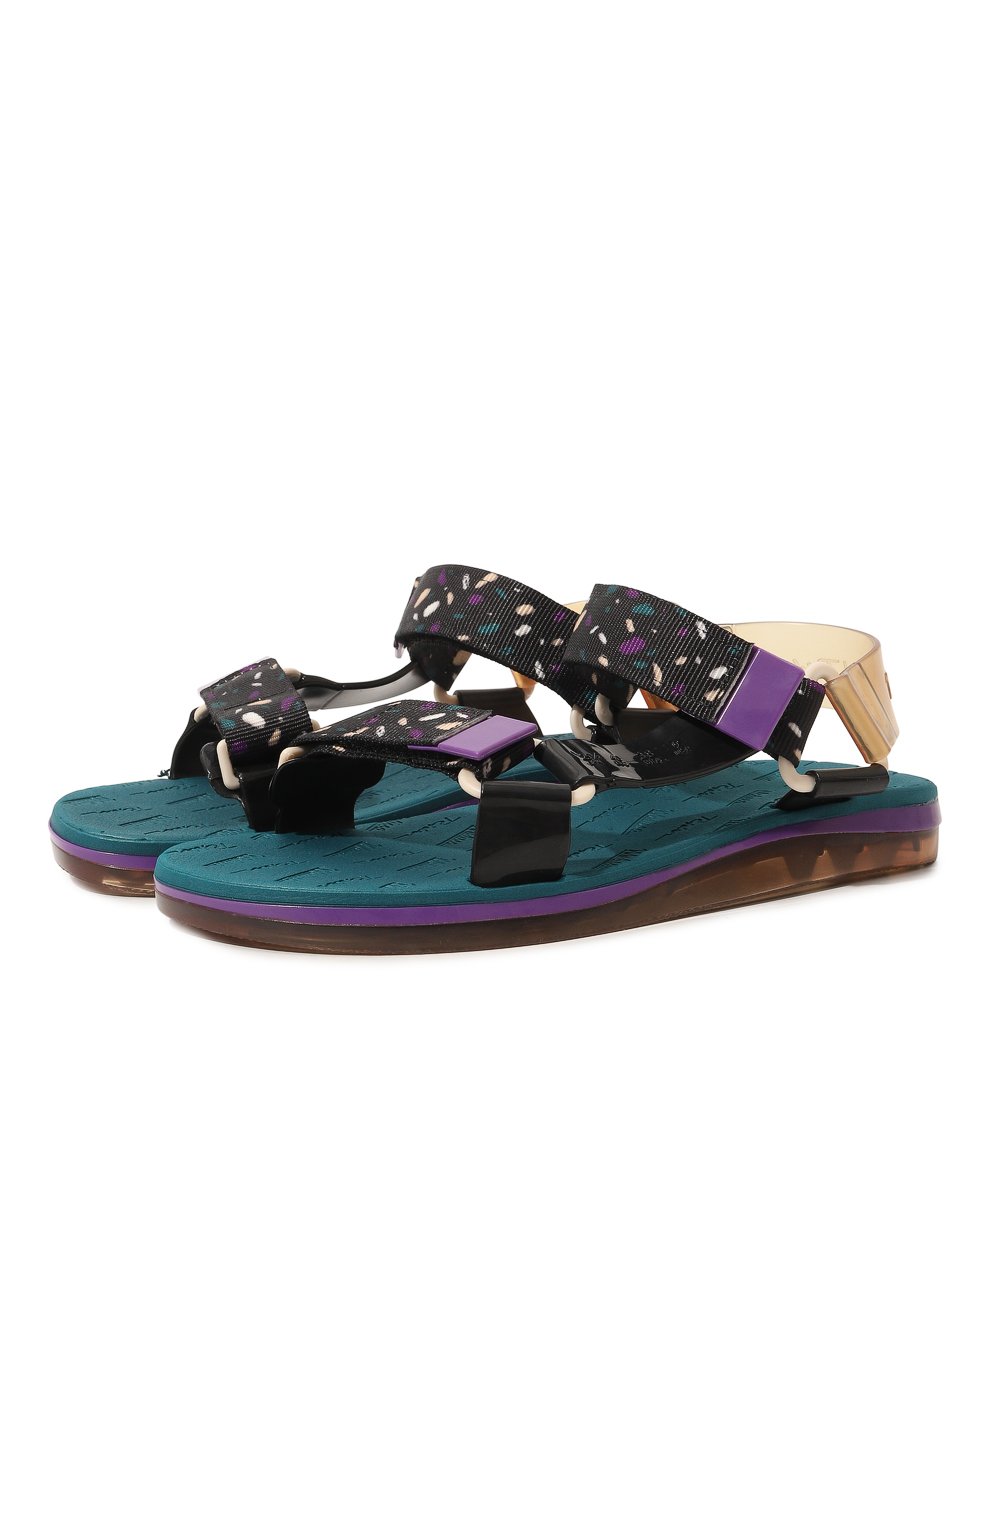 Женские сандалии MELISSA разноцветного цвета, арт. 32537 | Фото 1 (Подошва: Платформа; Материа�л внешний: Резина)